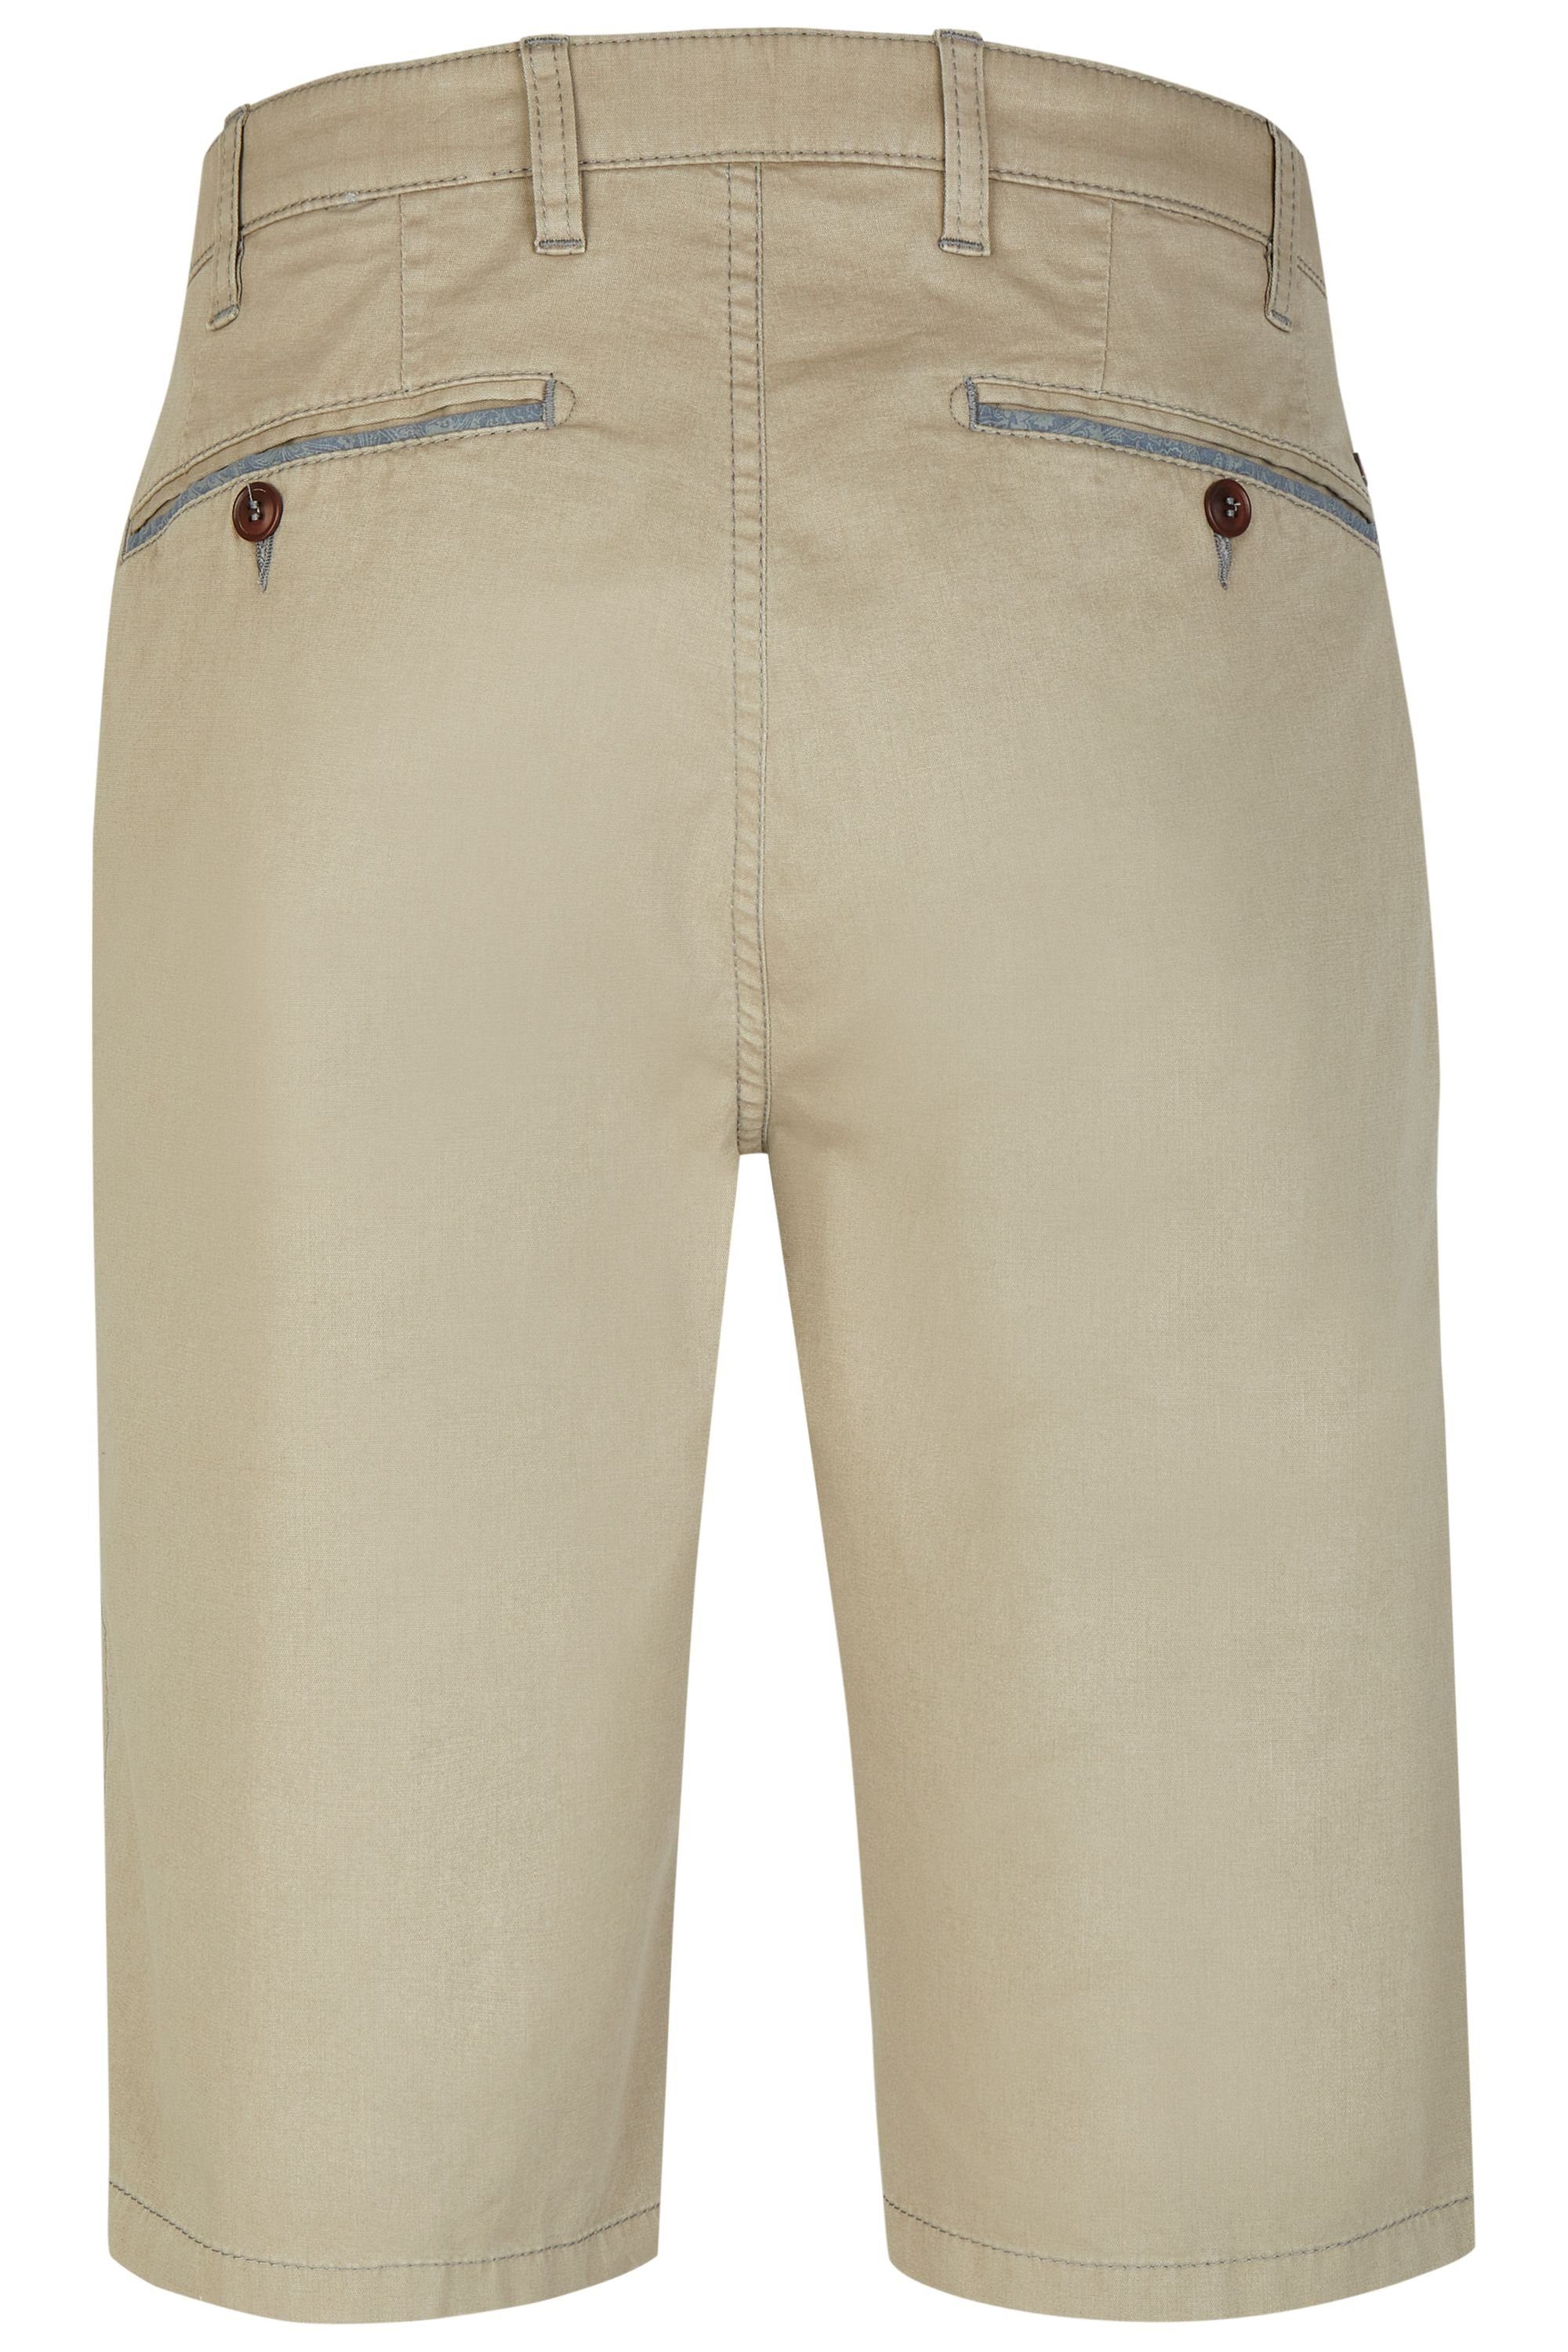 High Paisley 688 Modell Flex Modern Fit Stoffhose Shorts (21) Herren beige aubi: aubi